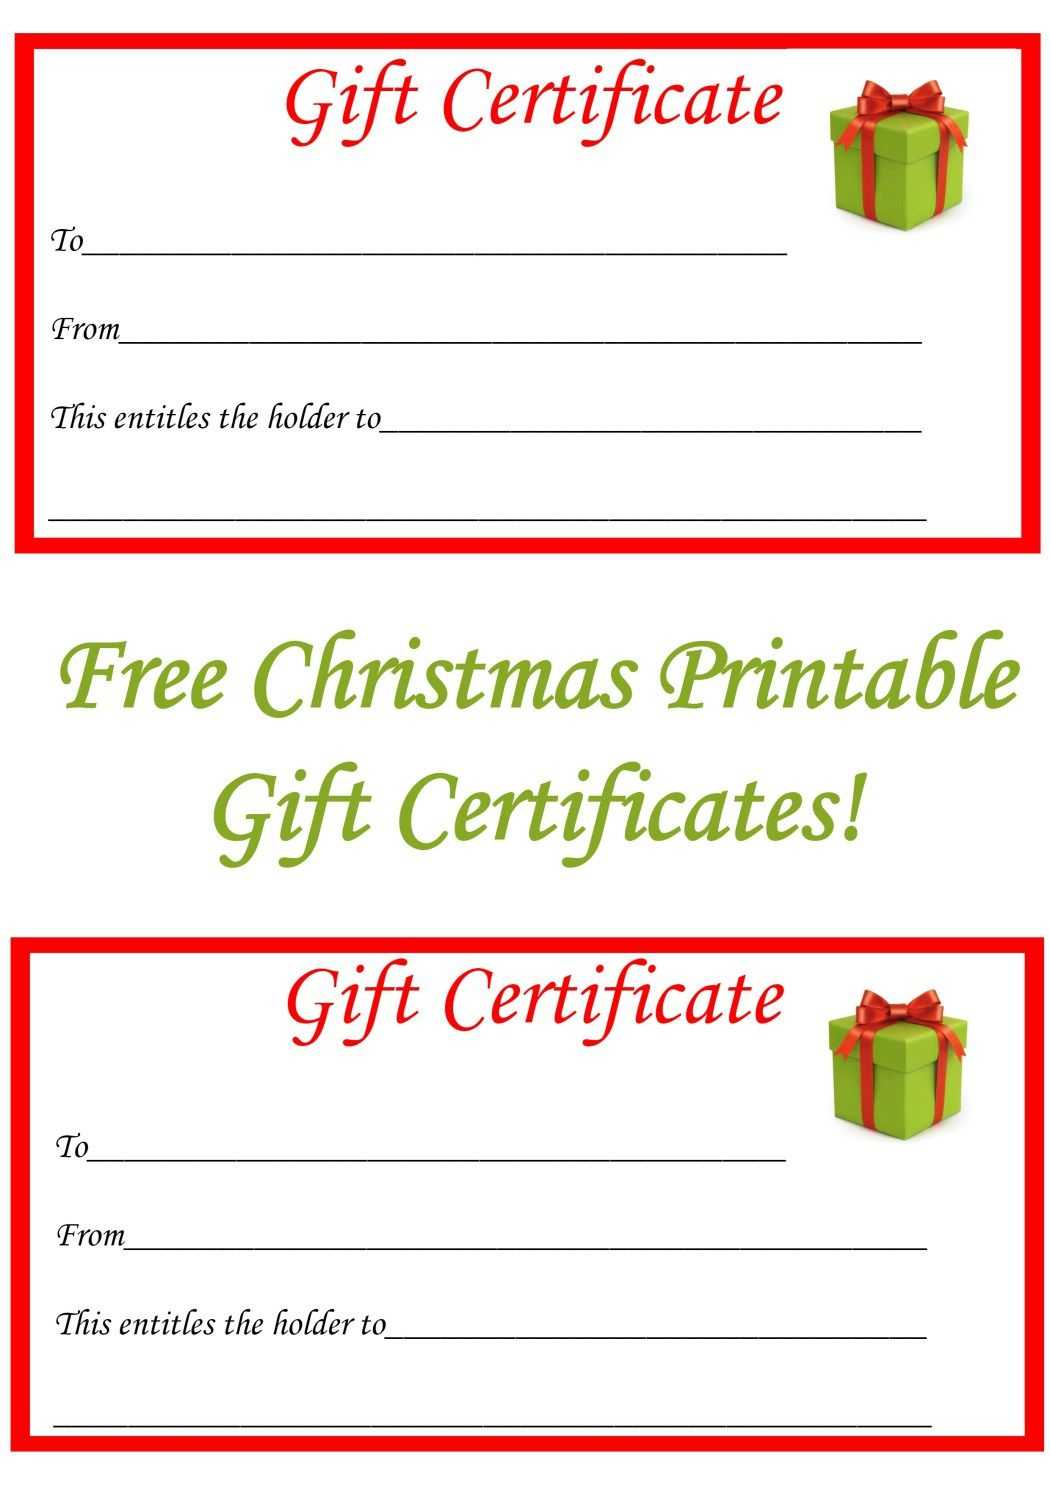 Free Christmas Printable Gift Certificates | Gift Ideas With Homemade Christmas Gift Certificates Templates